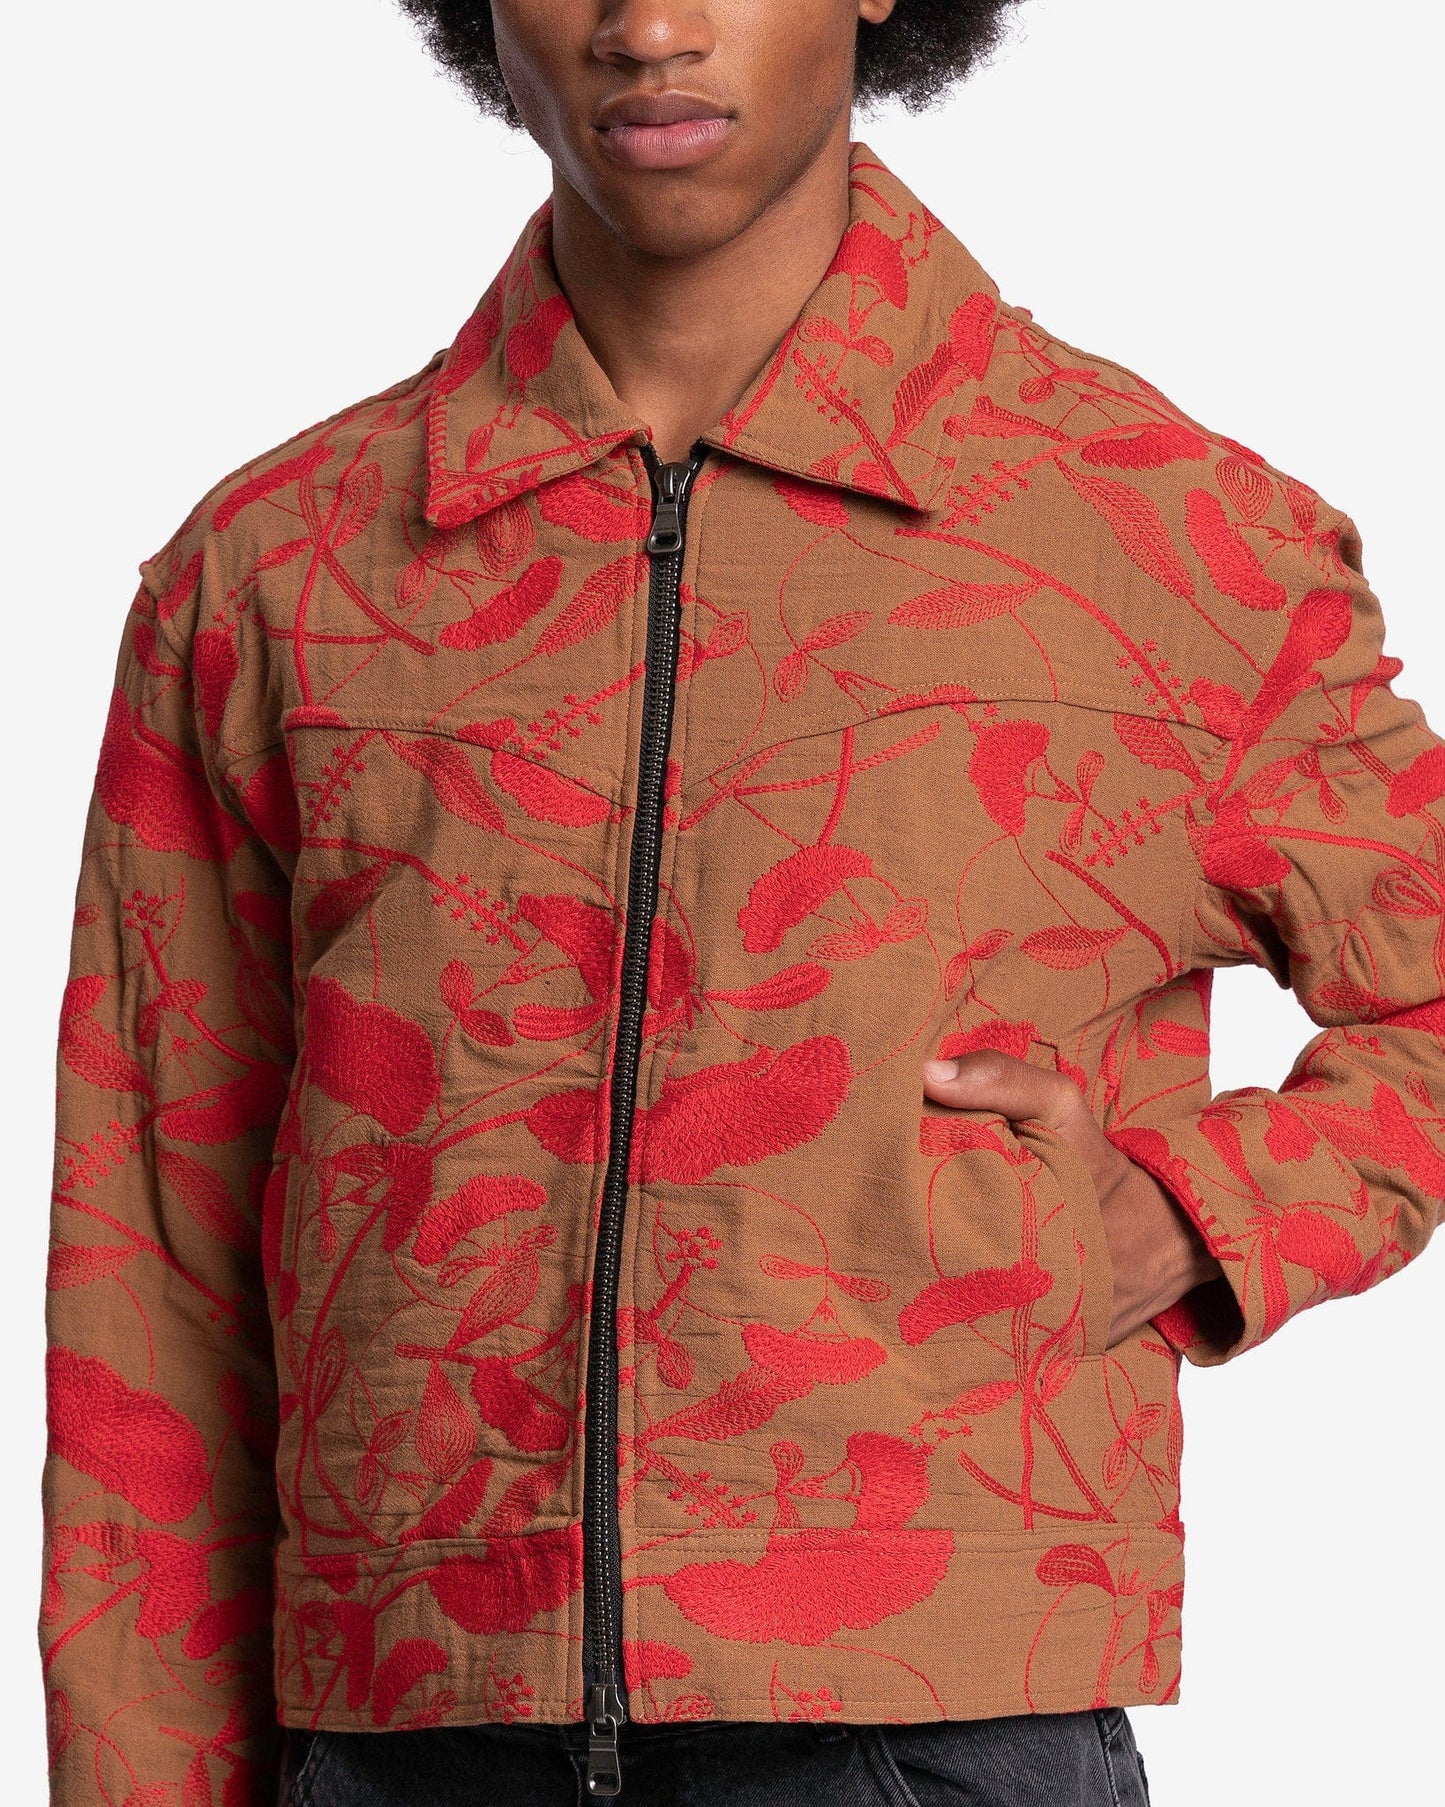 Andersson Bell Men's Jackets Flower Embroidery Zip-Up Jacket in Beige